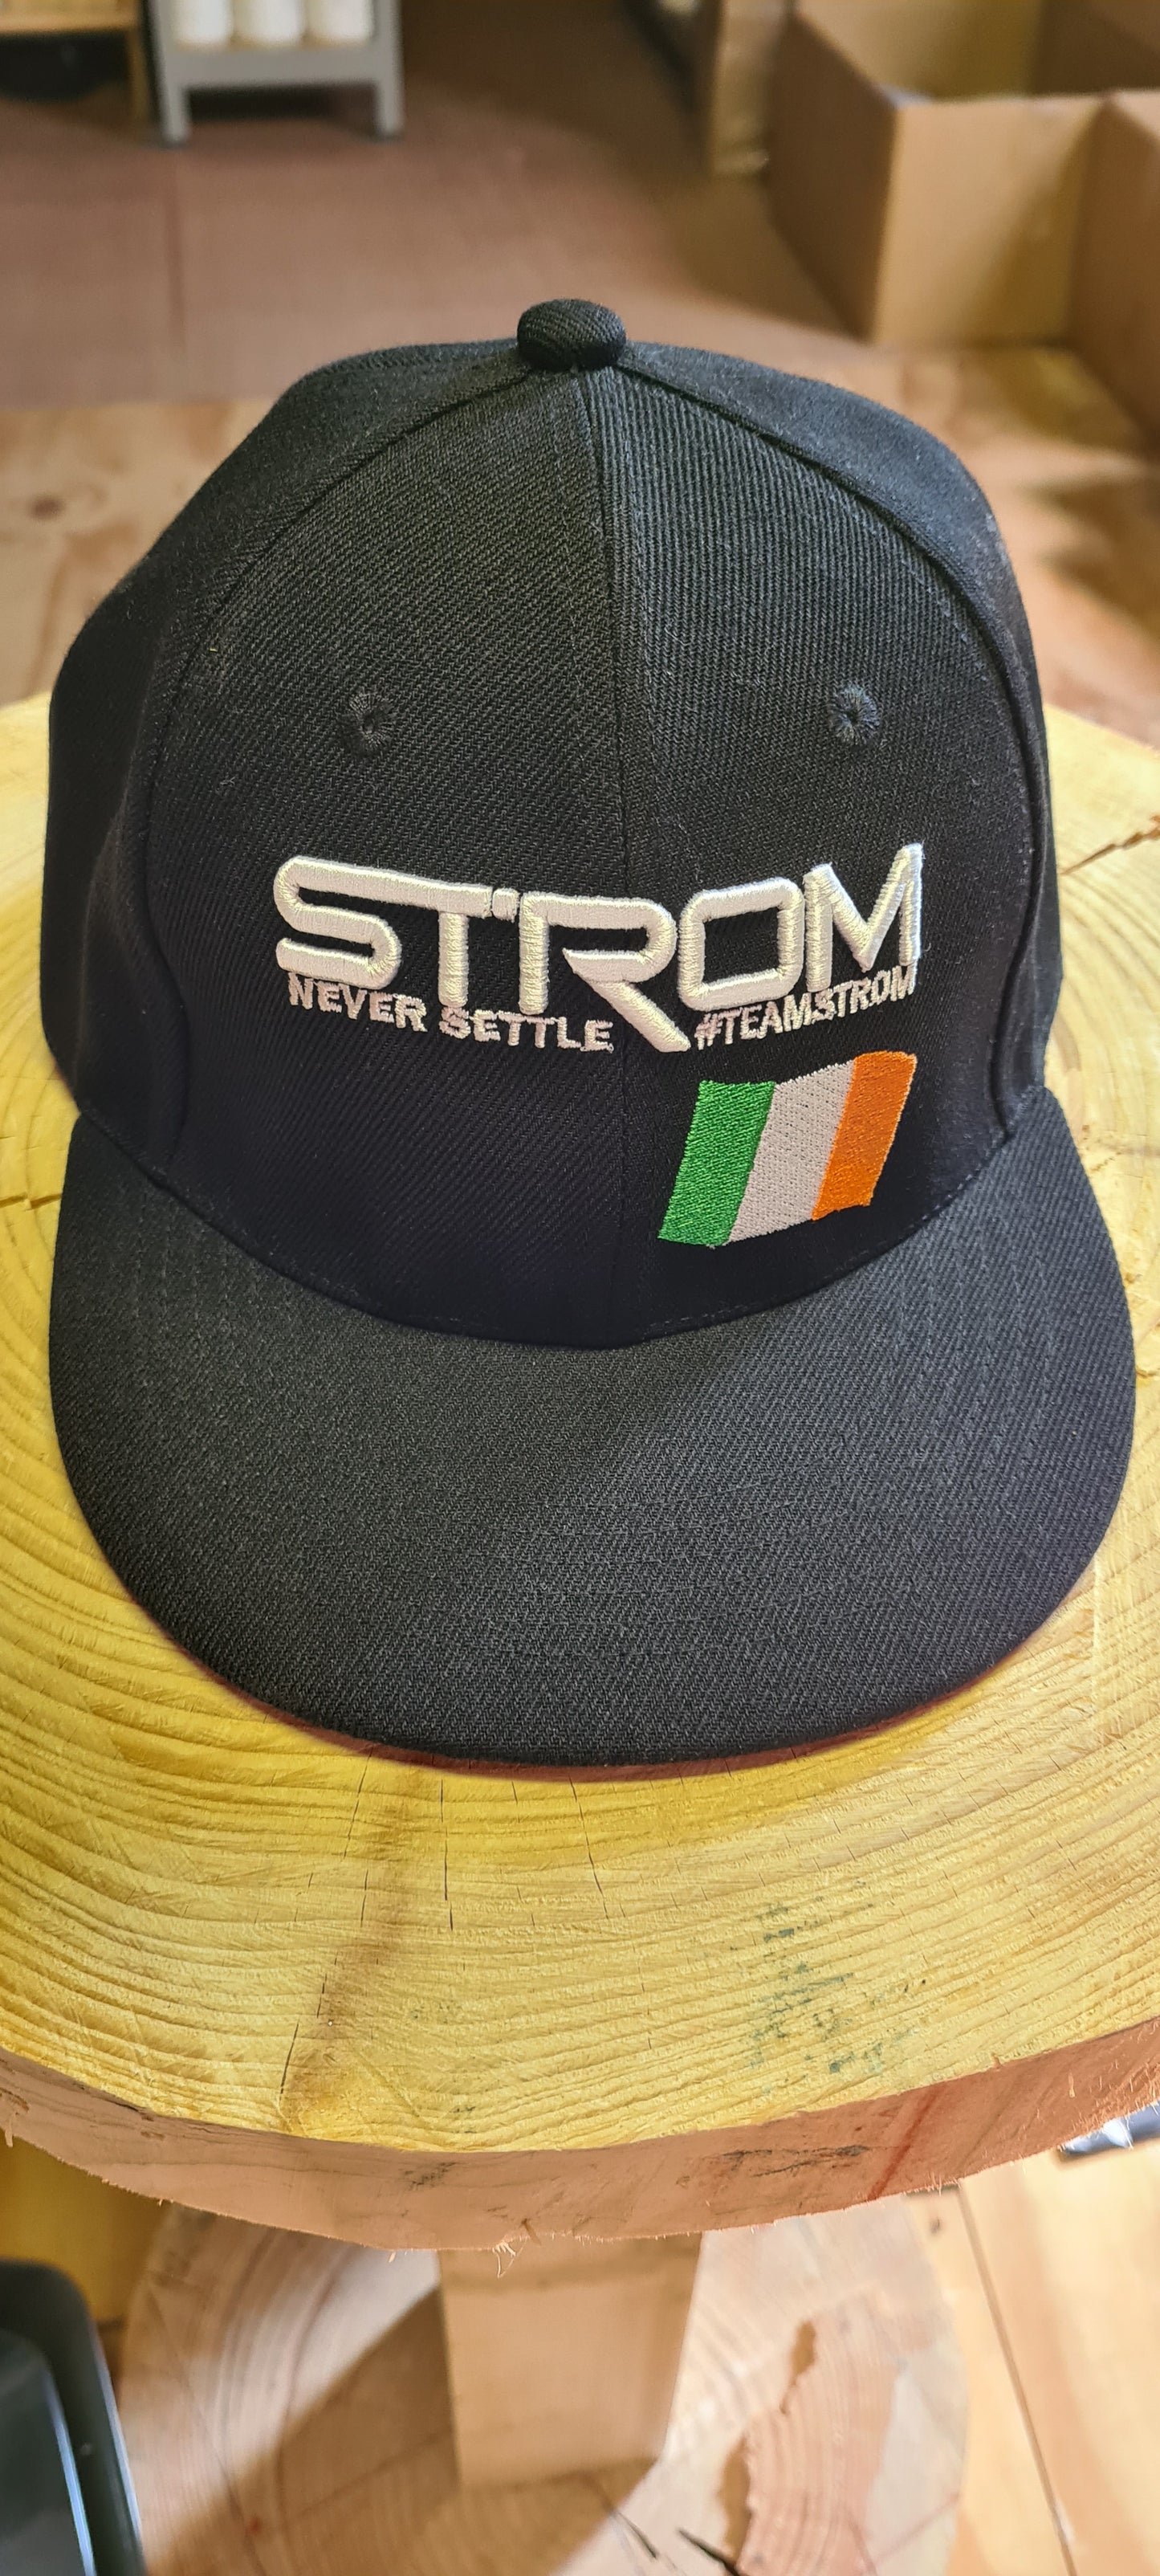 Strom Ireland Limited Edition SnapBack